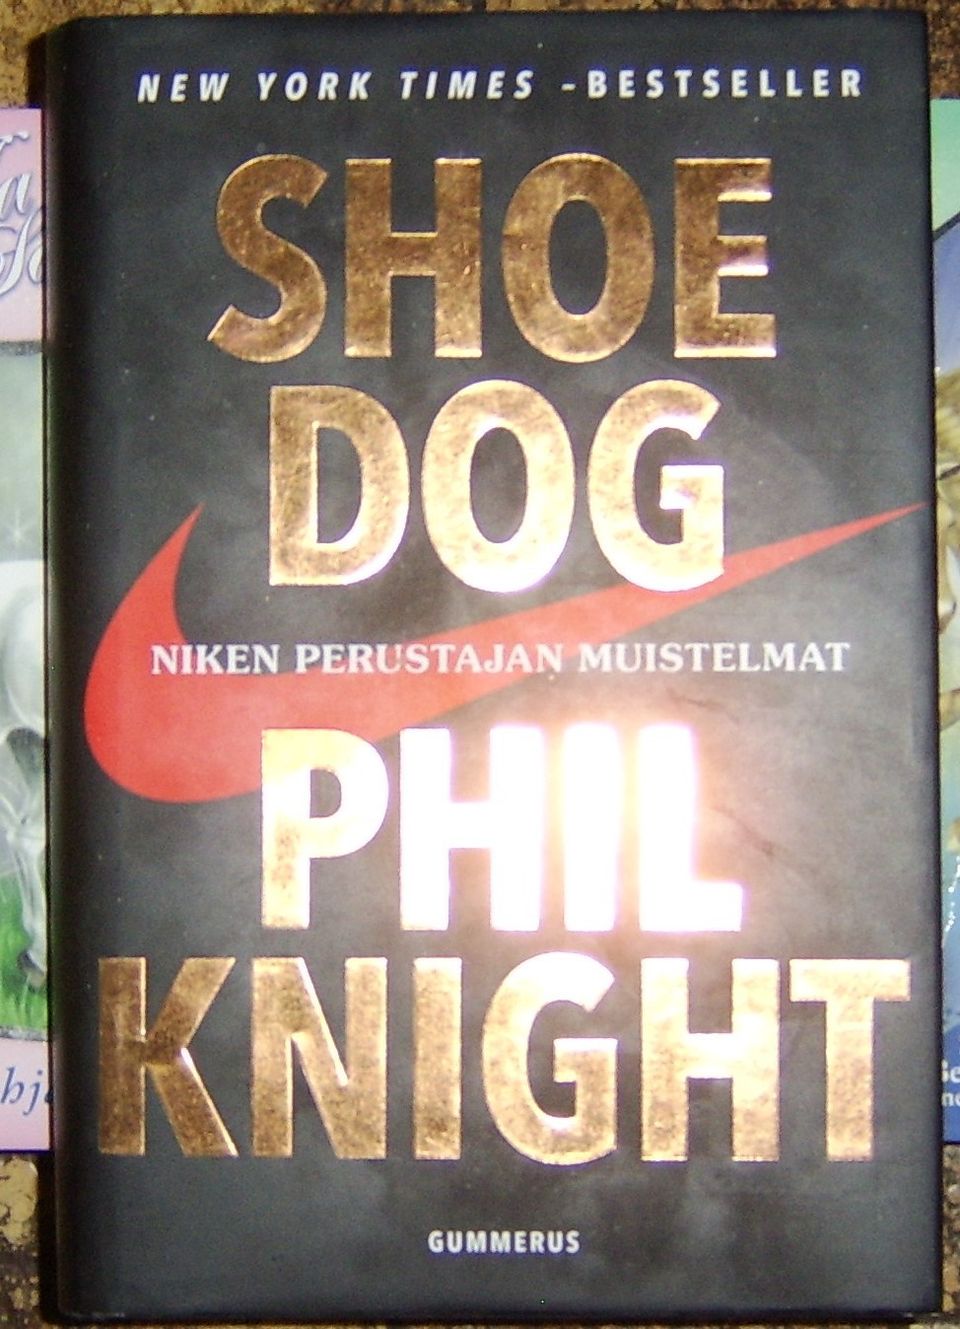 Phil Knight : Shoe Dog - Niken perustajan muistelmat (2018)